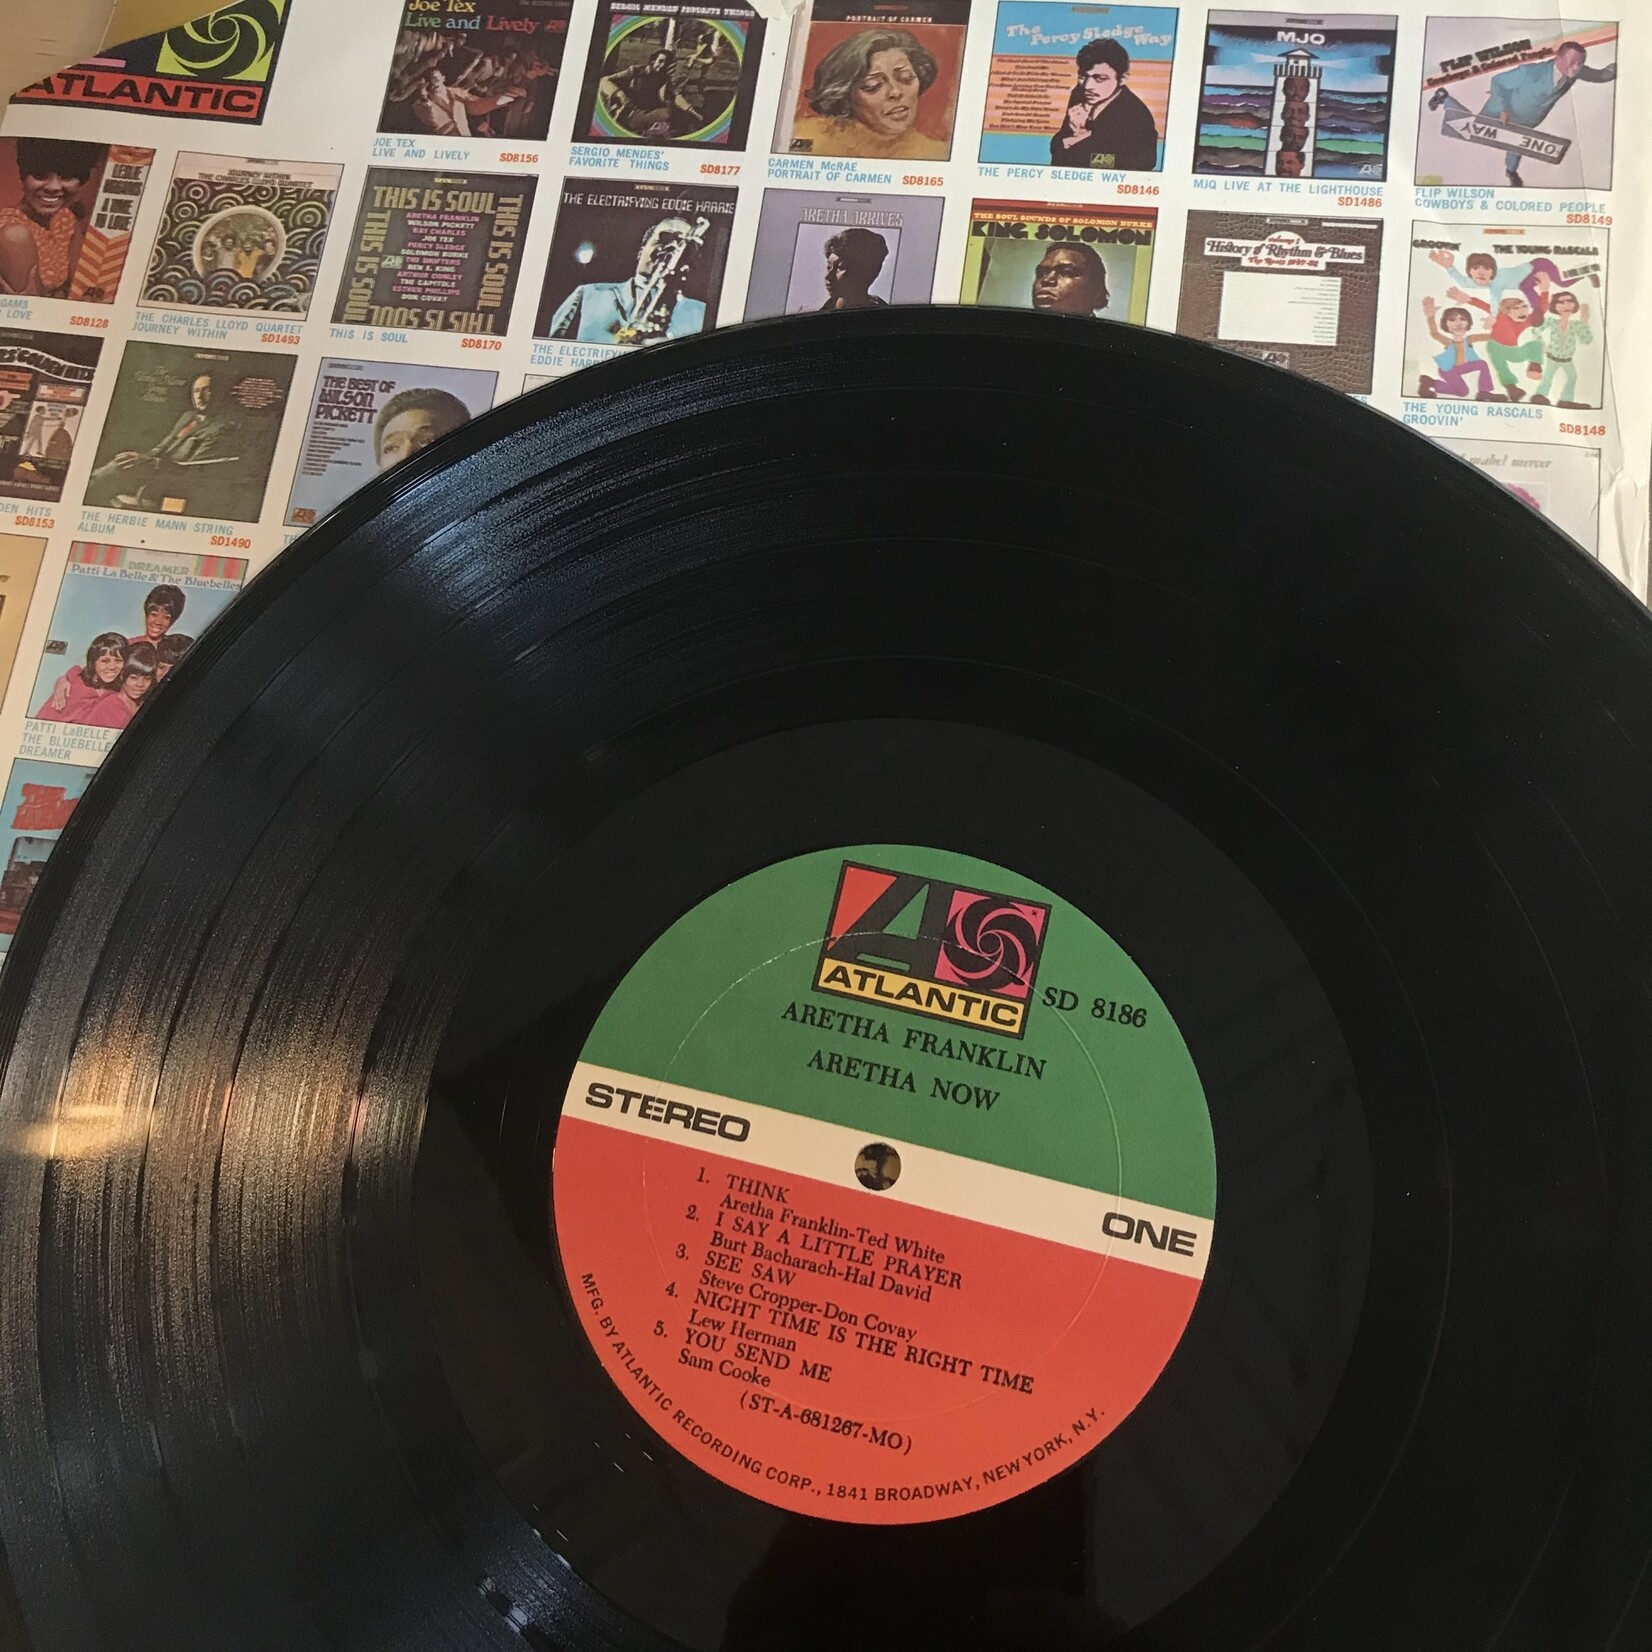 Aretha Franklin - Aretha Now - SD8186 - Vinyl LP (USED)